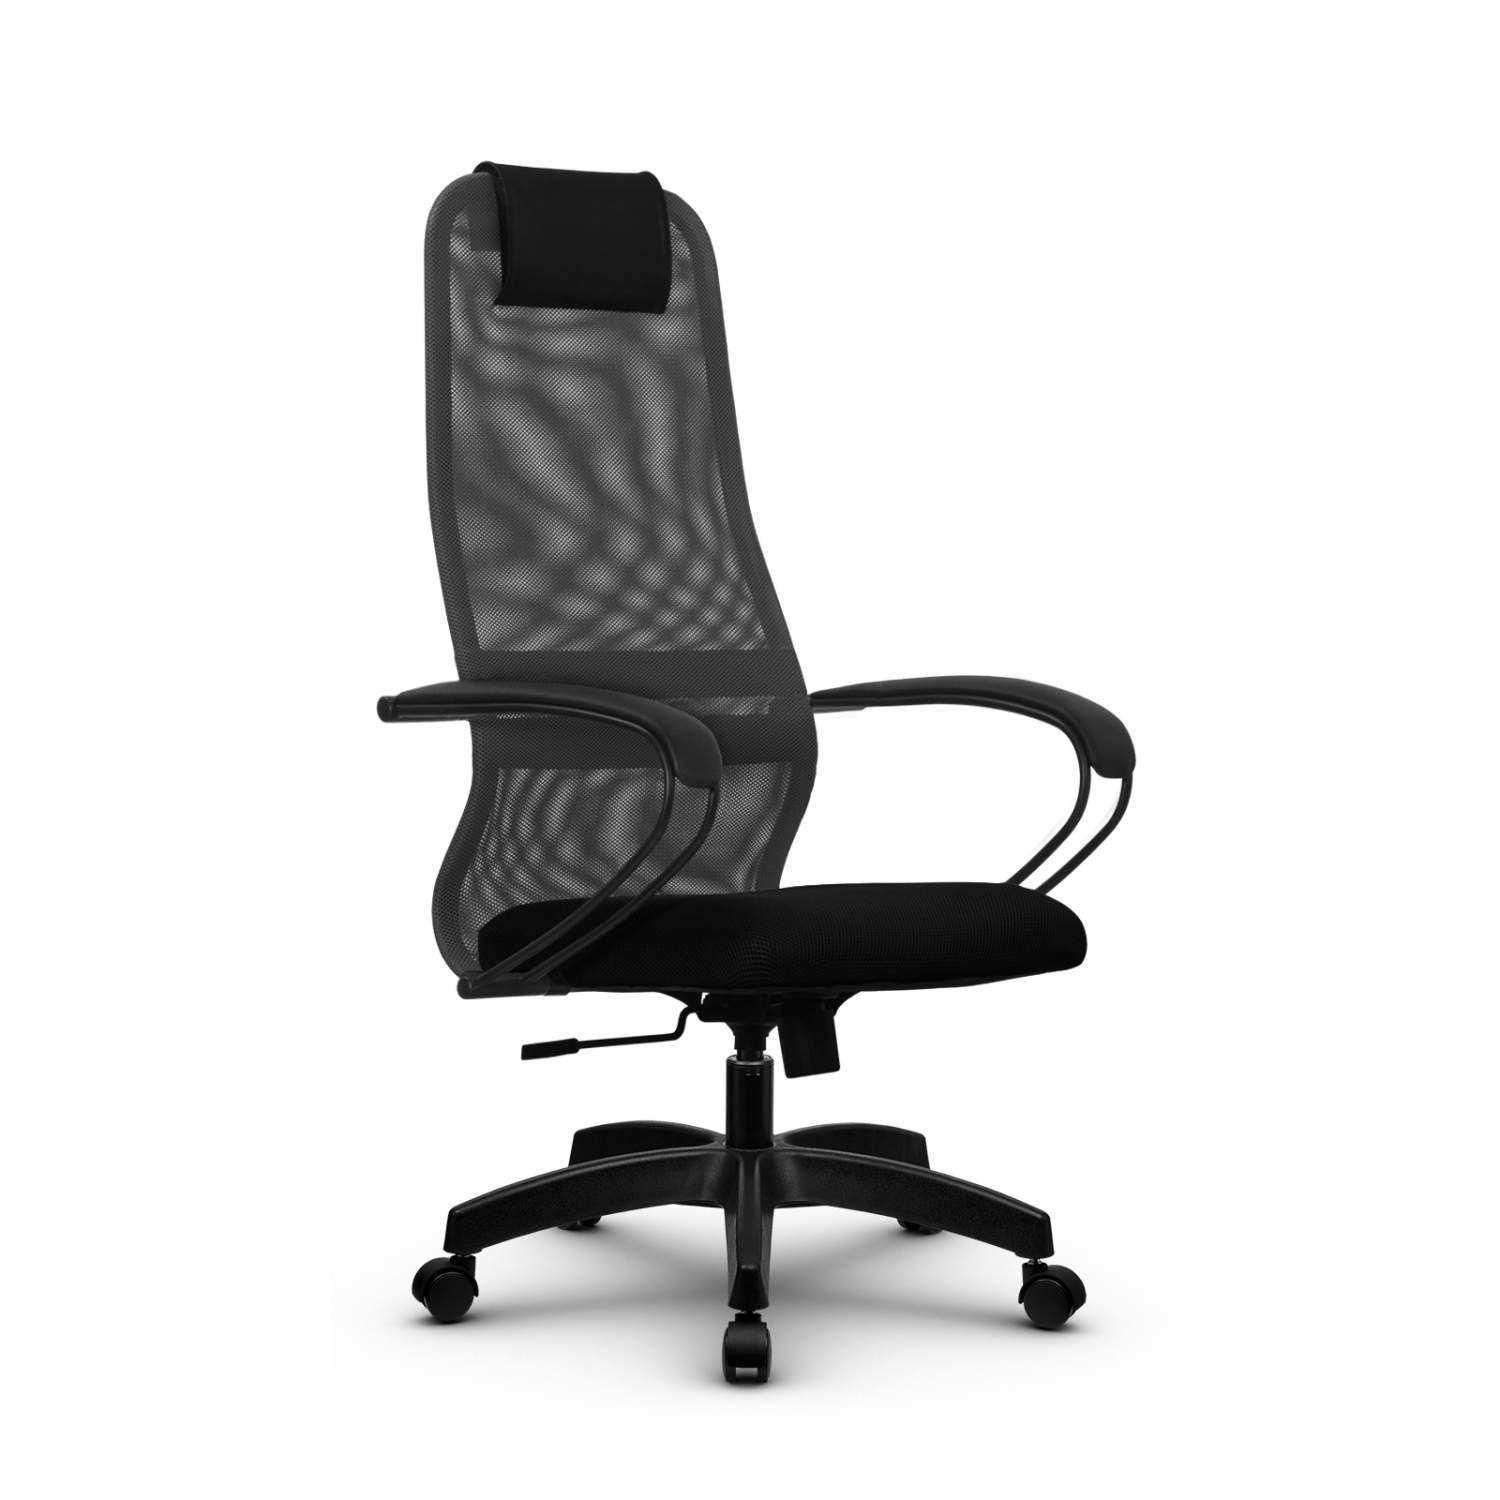 Компьютерные кресла Metta - купить компьютерное кресло Metta, цены на Мегамаркет